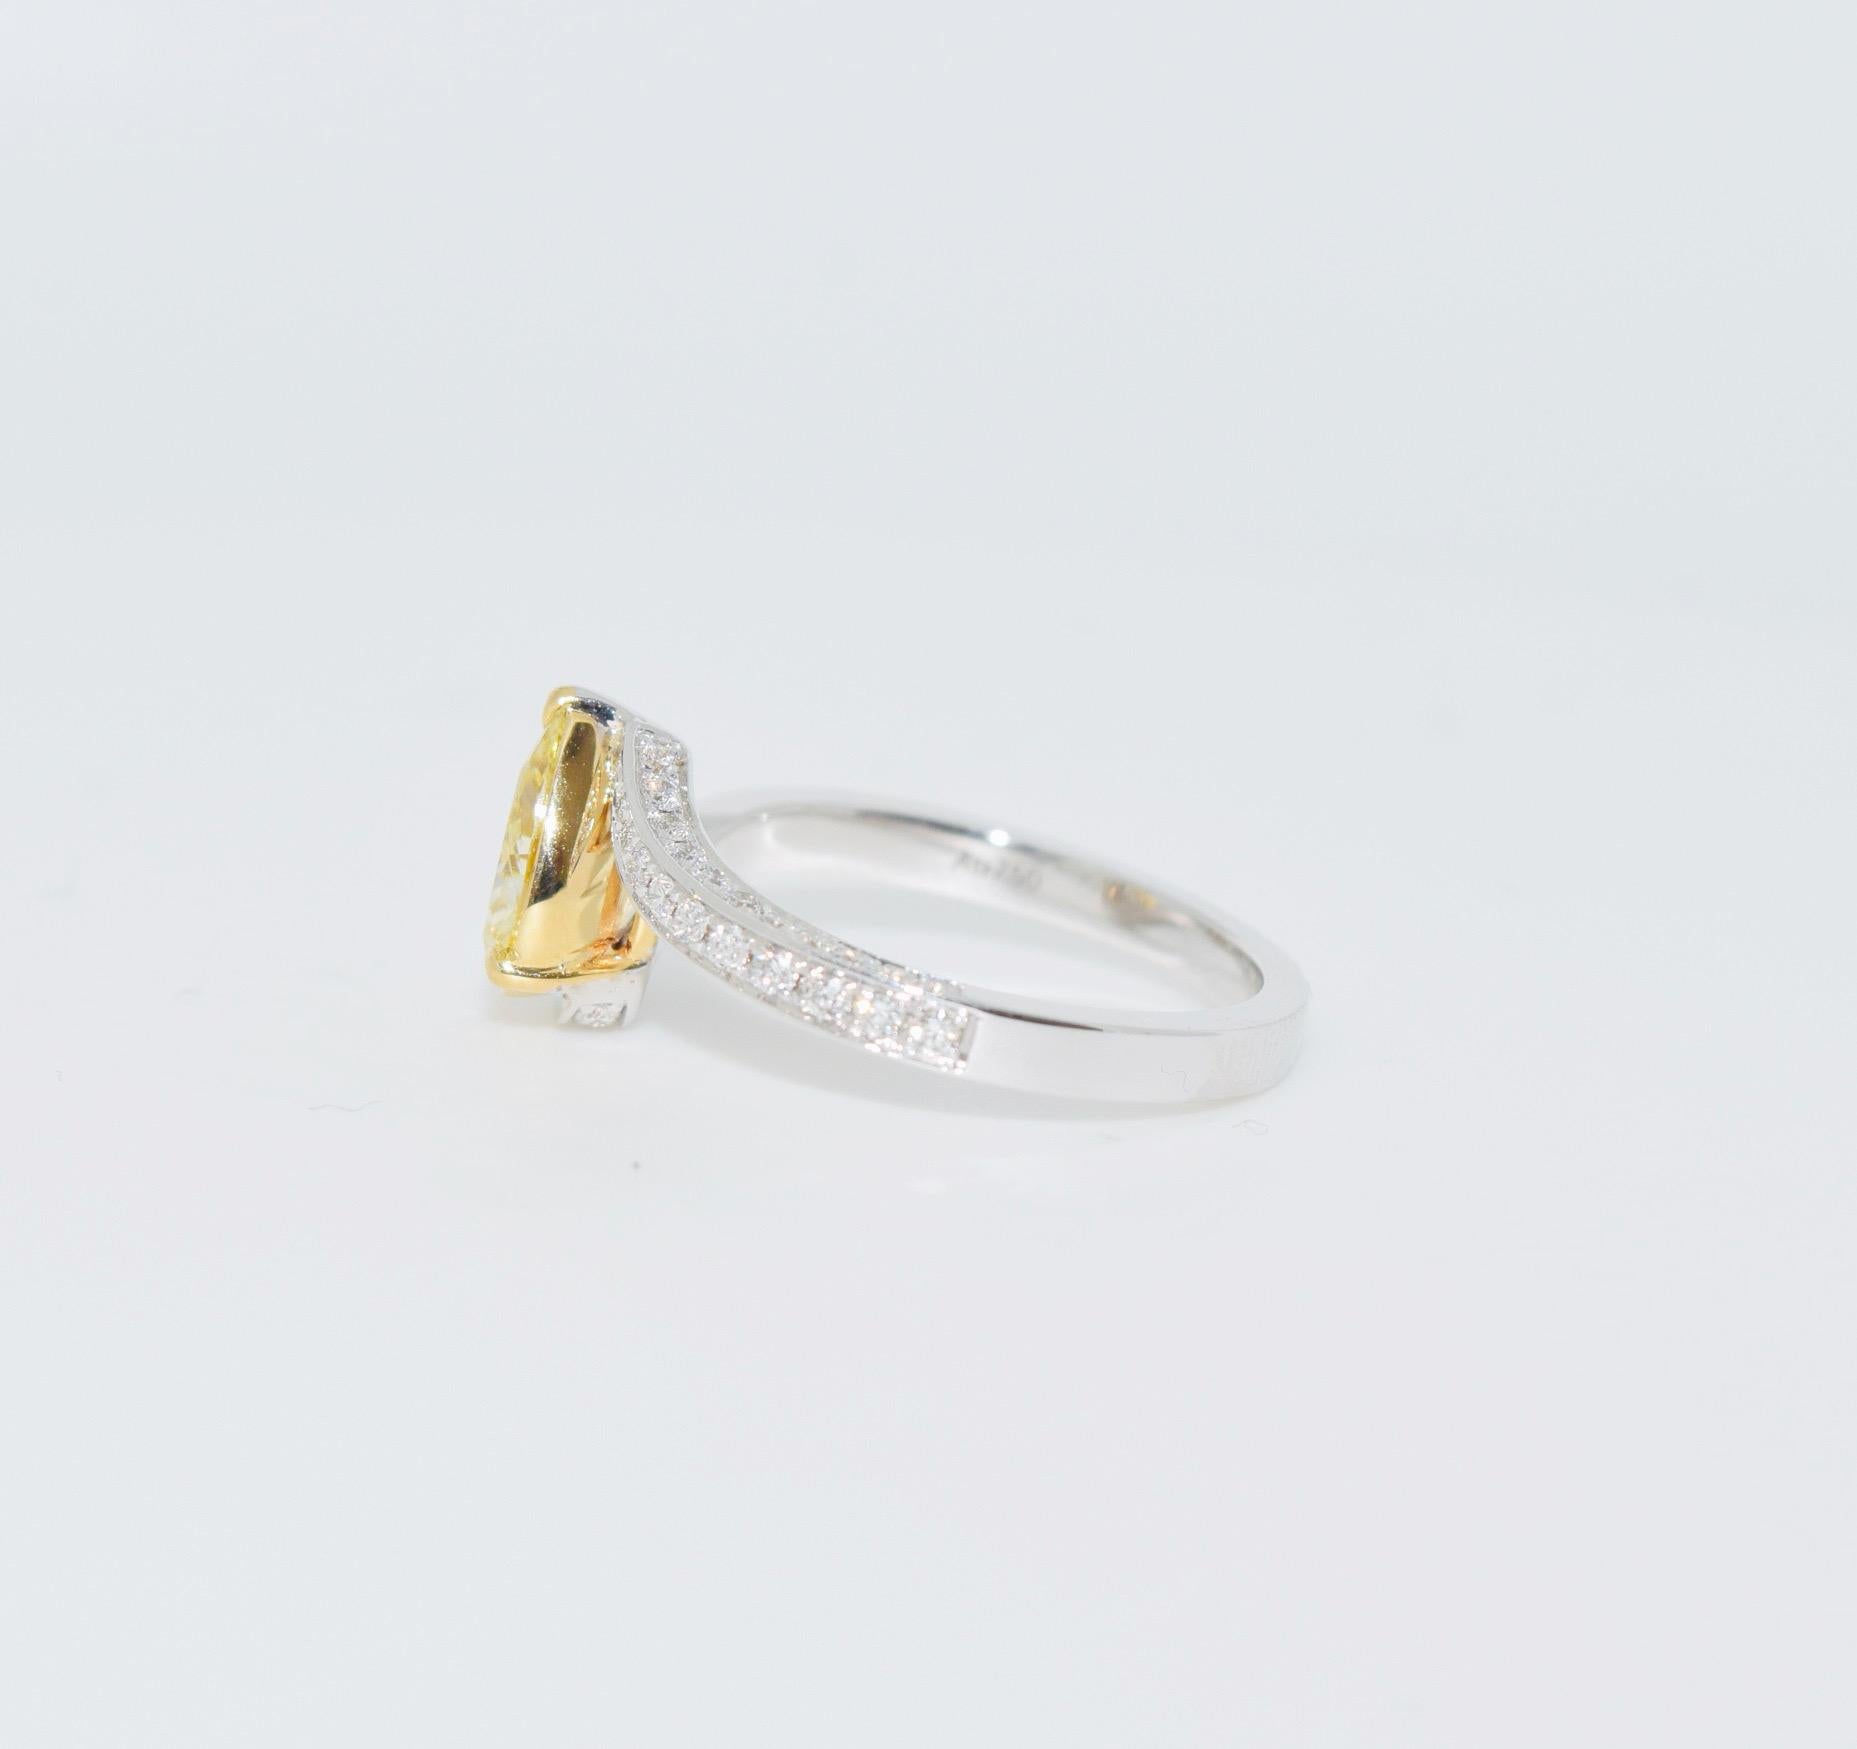 1.00 Carat Diamond Ring VS2 Clarity GIA Certified For Sale 1